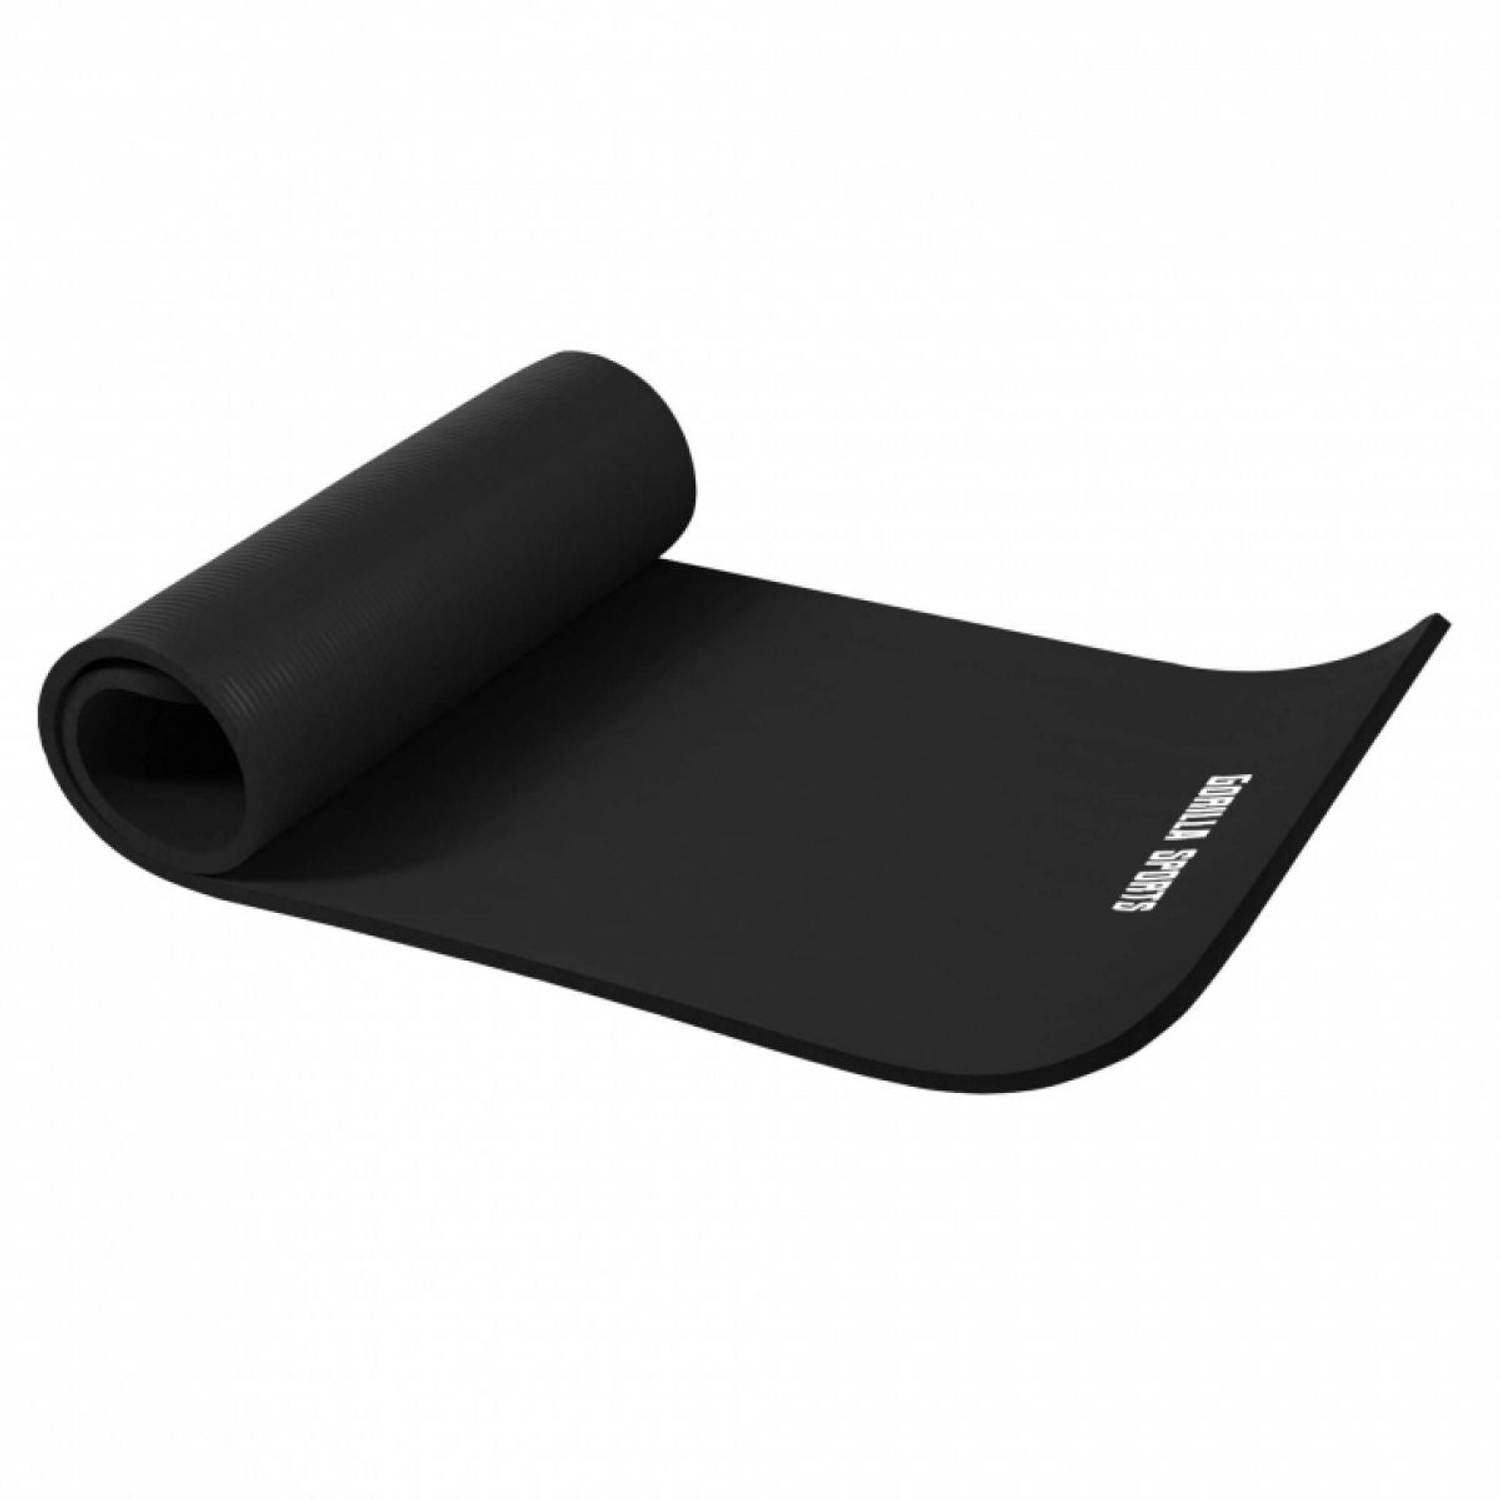 Yogamat Deluxe (190 x 100 x 1,5 cm) zwart